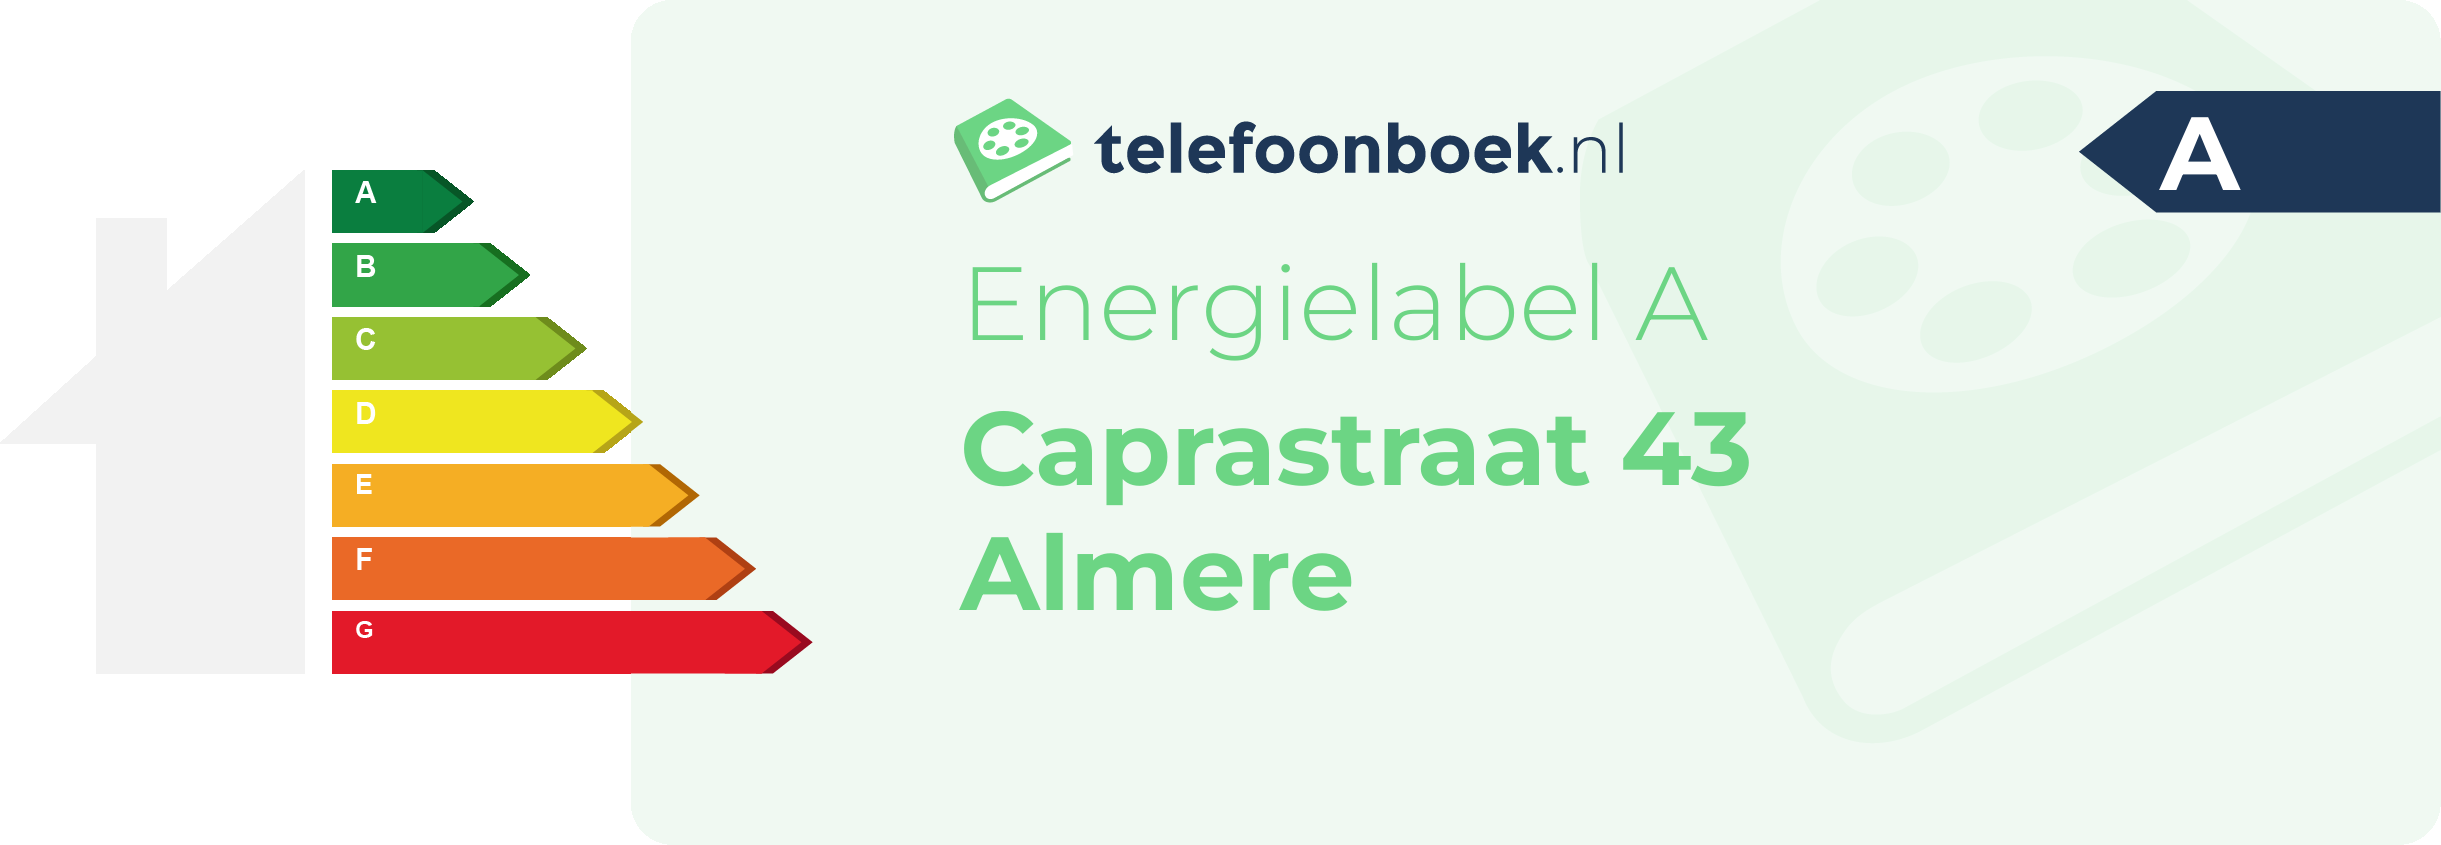 Energielabel Caprastraat 43 Almere